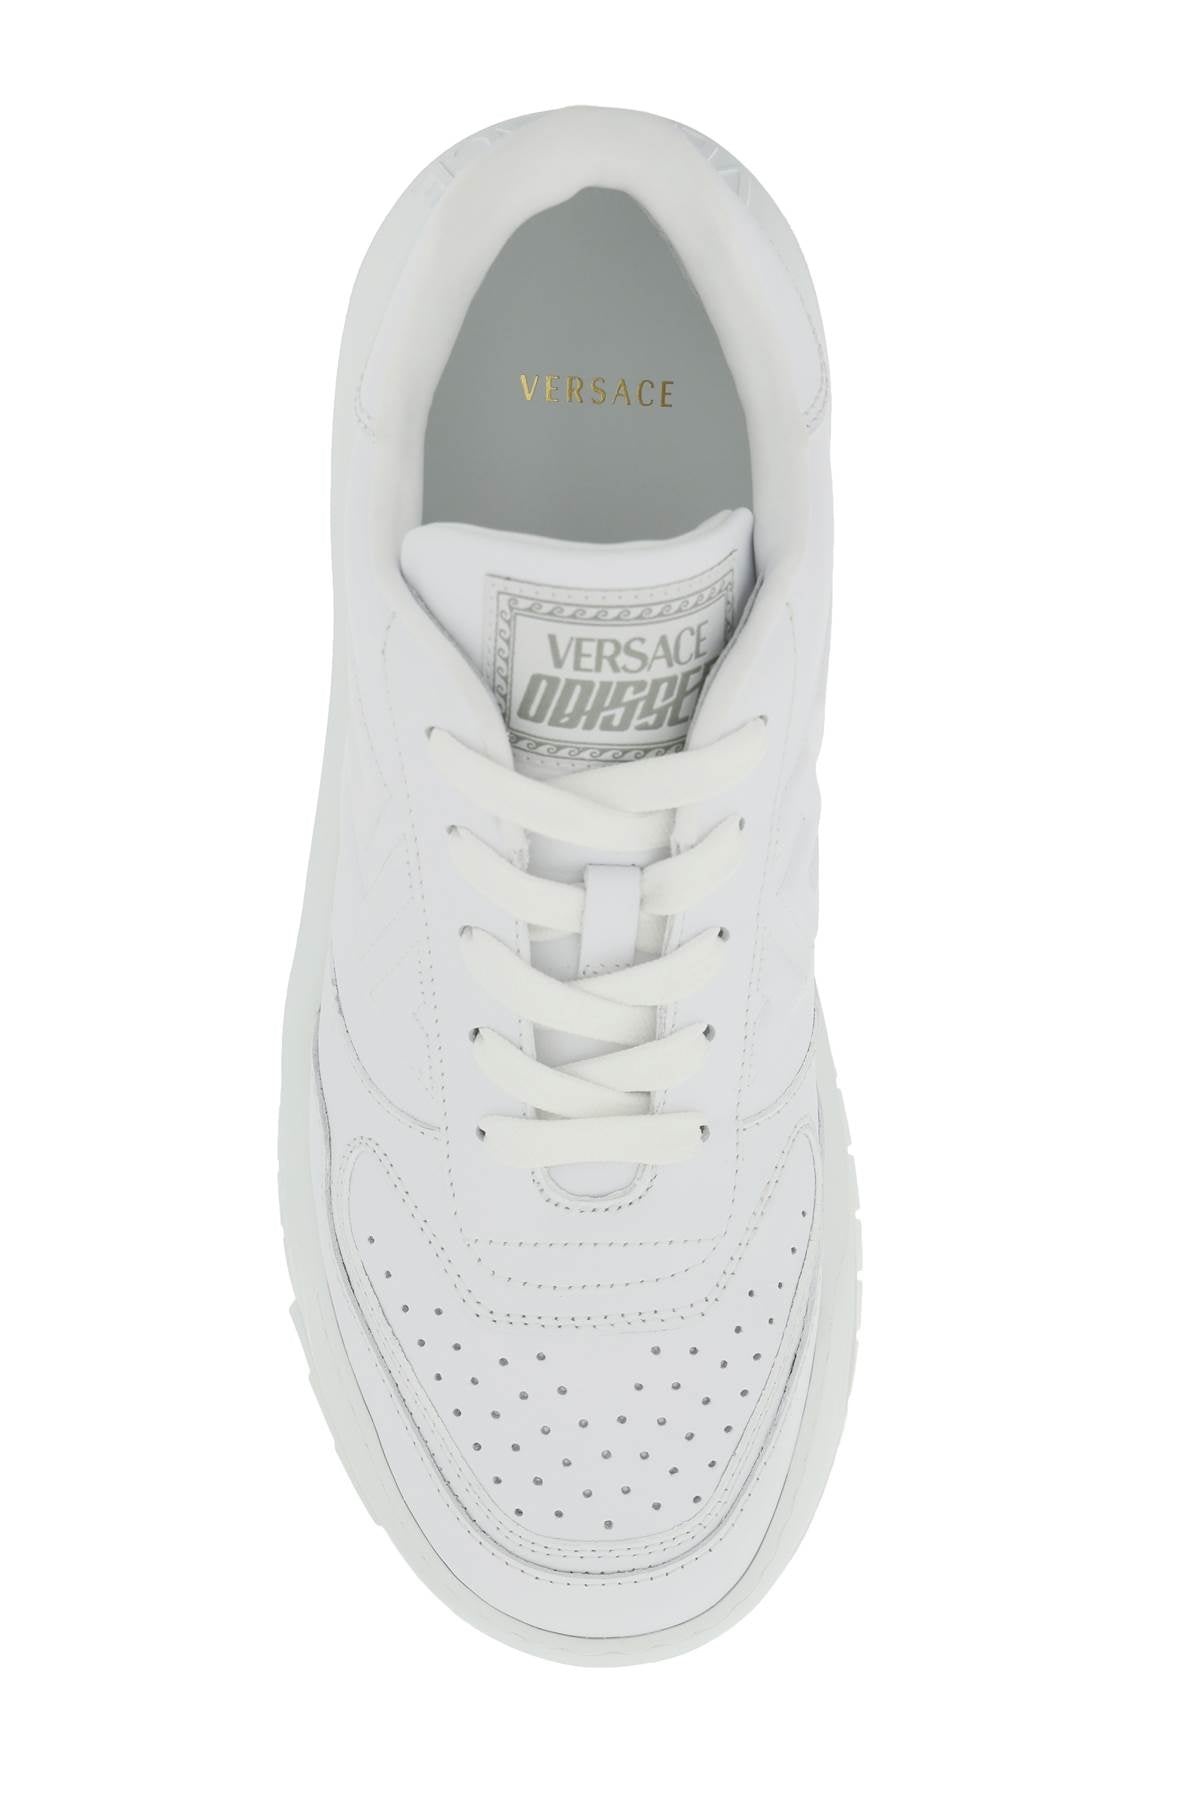 Versace Odissea Sneakers Men - 2